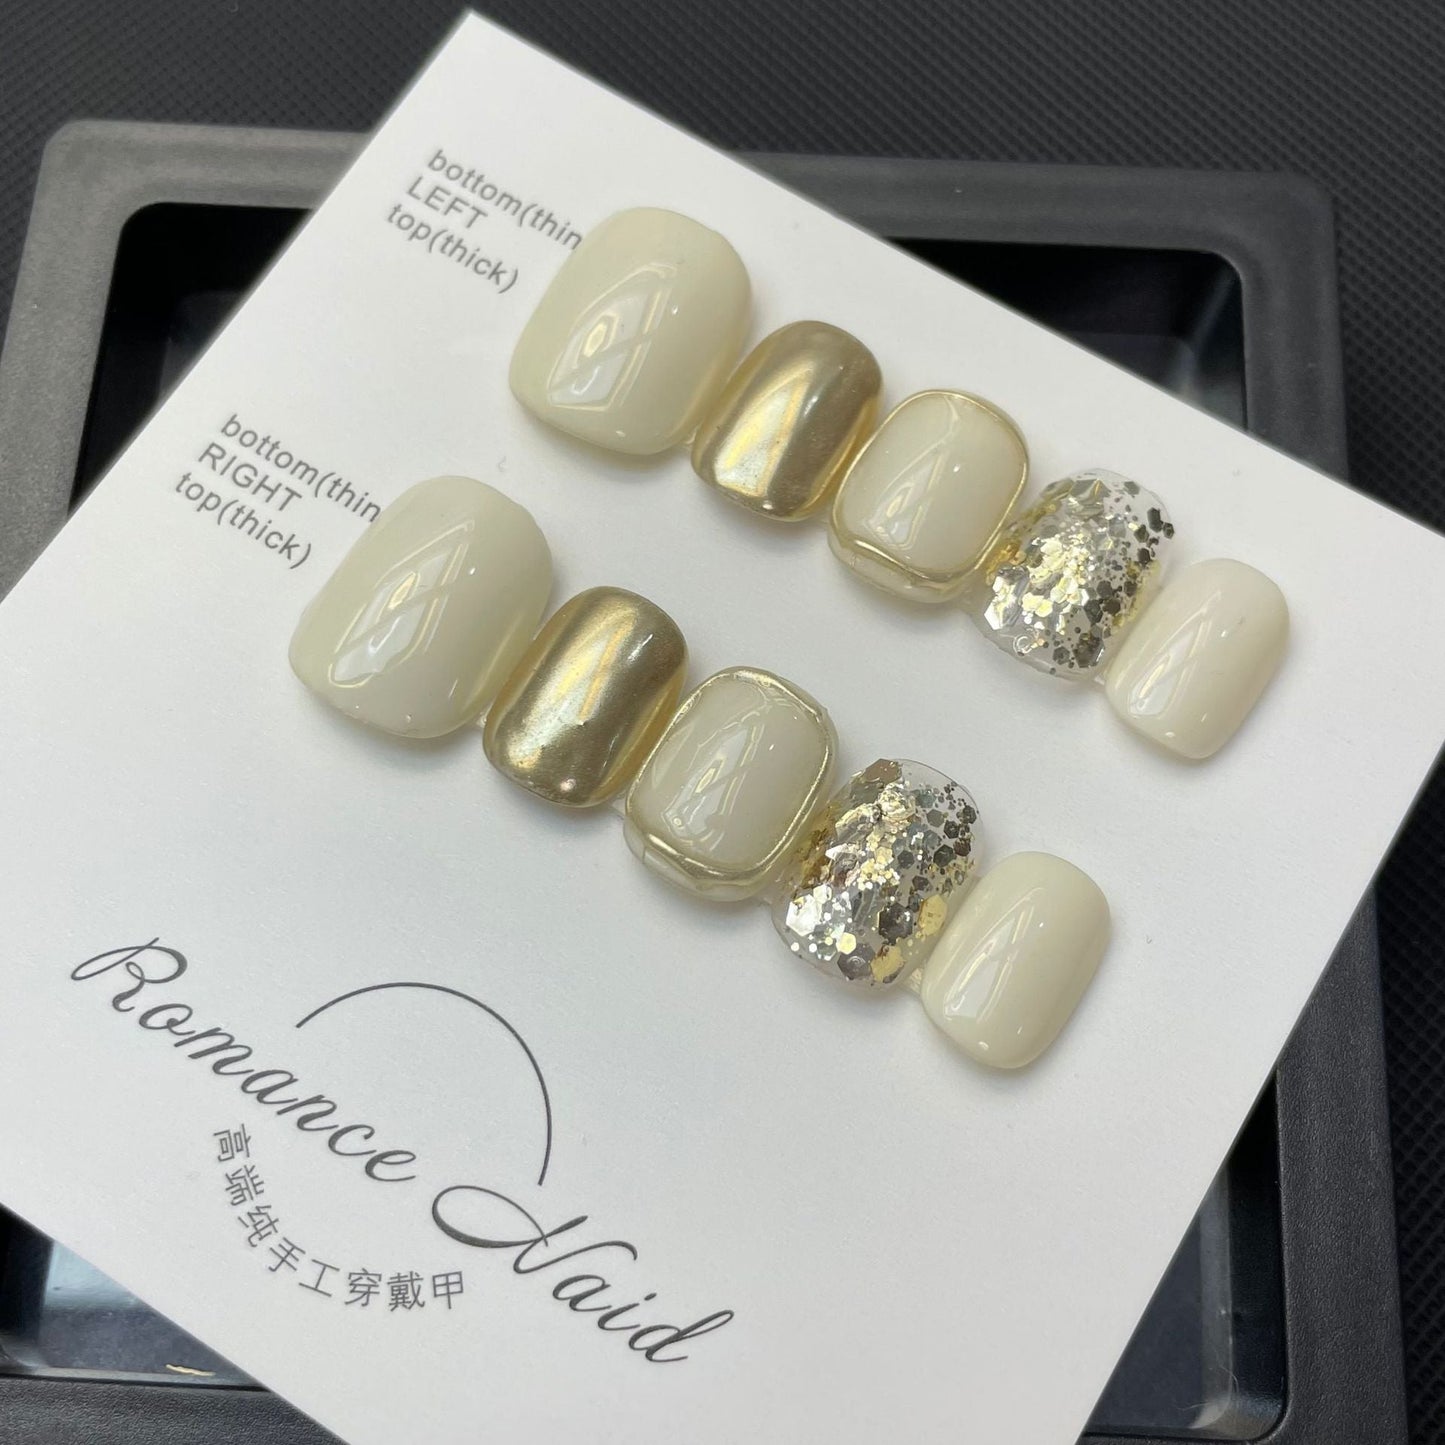 624 sequin press on nails 100% handmade false nails white golden sliver